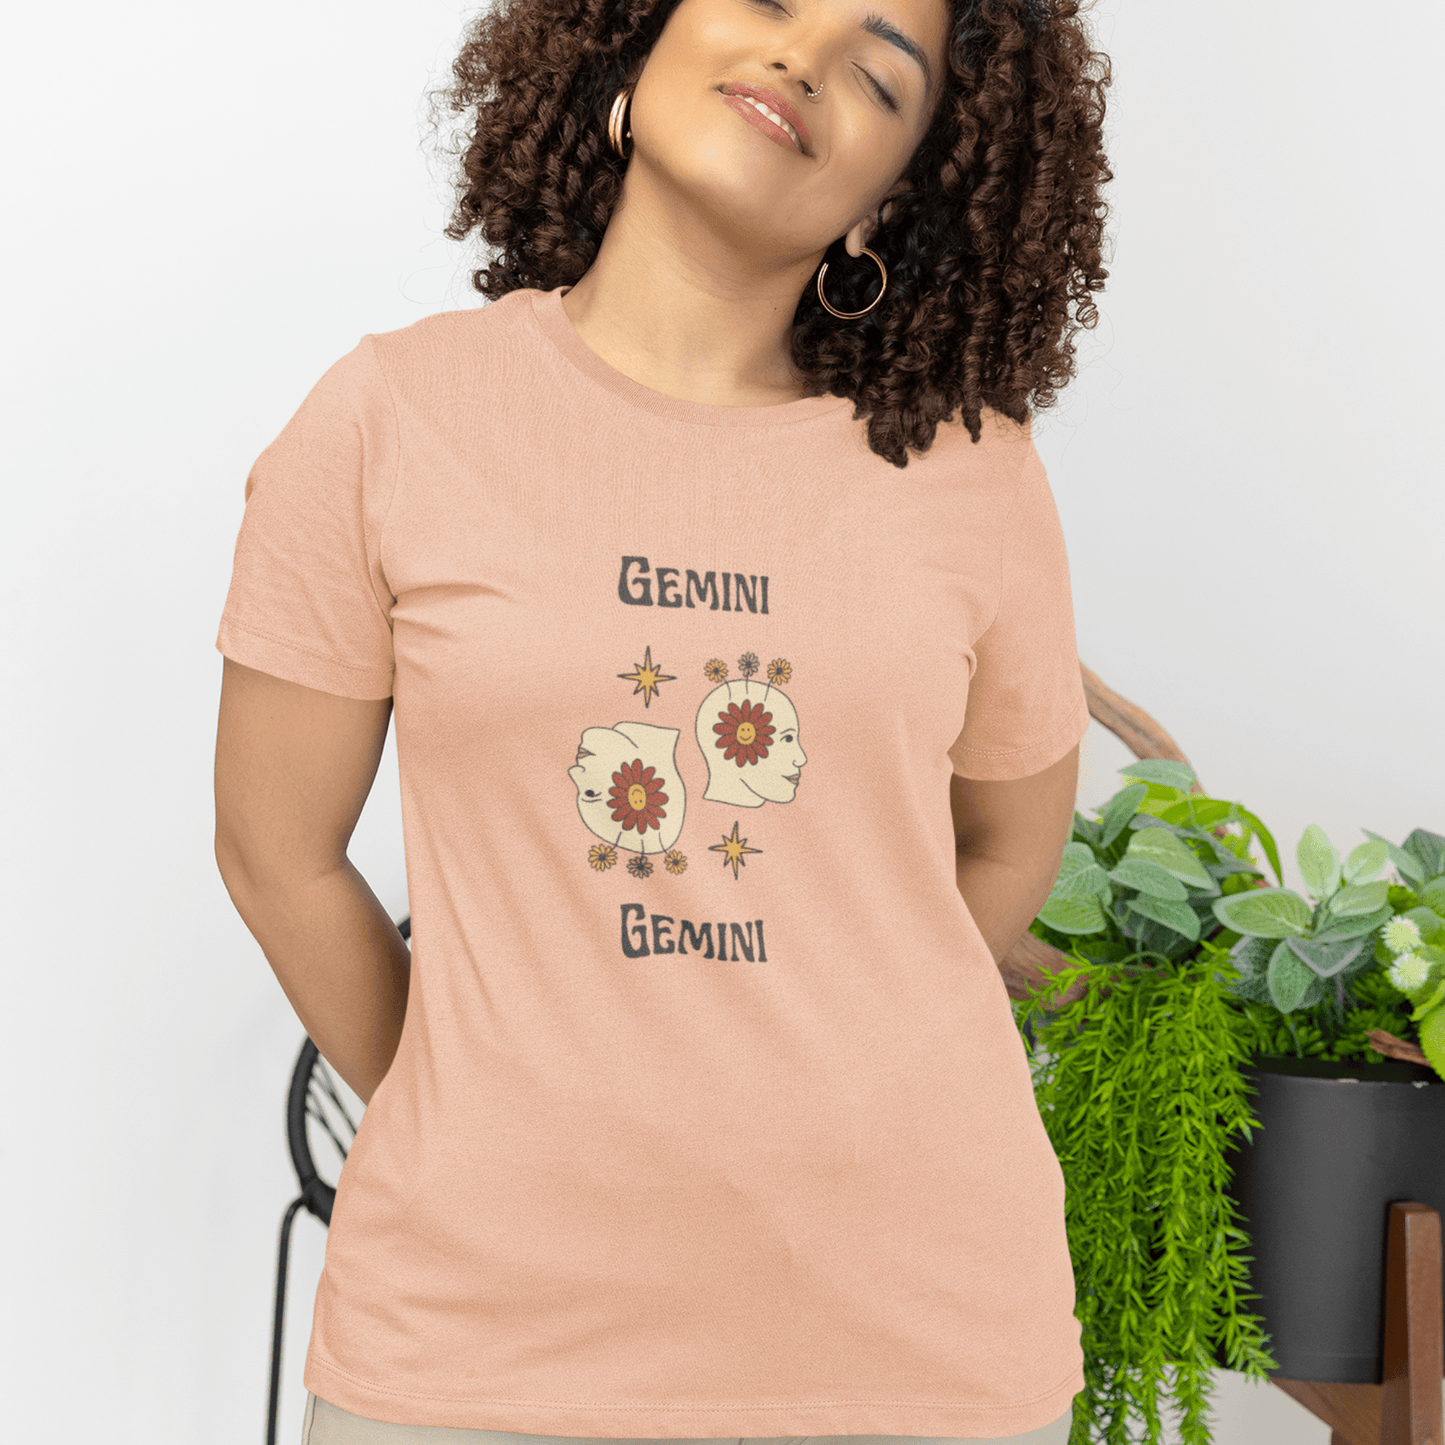 T-Shirt Gemini Flower Power T-Shirt - Retro Zodiac Apparel for Astrology Lovers